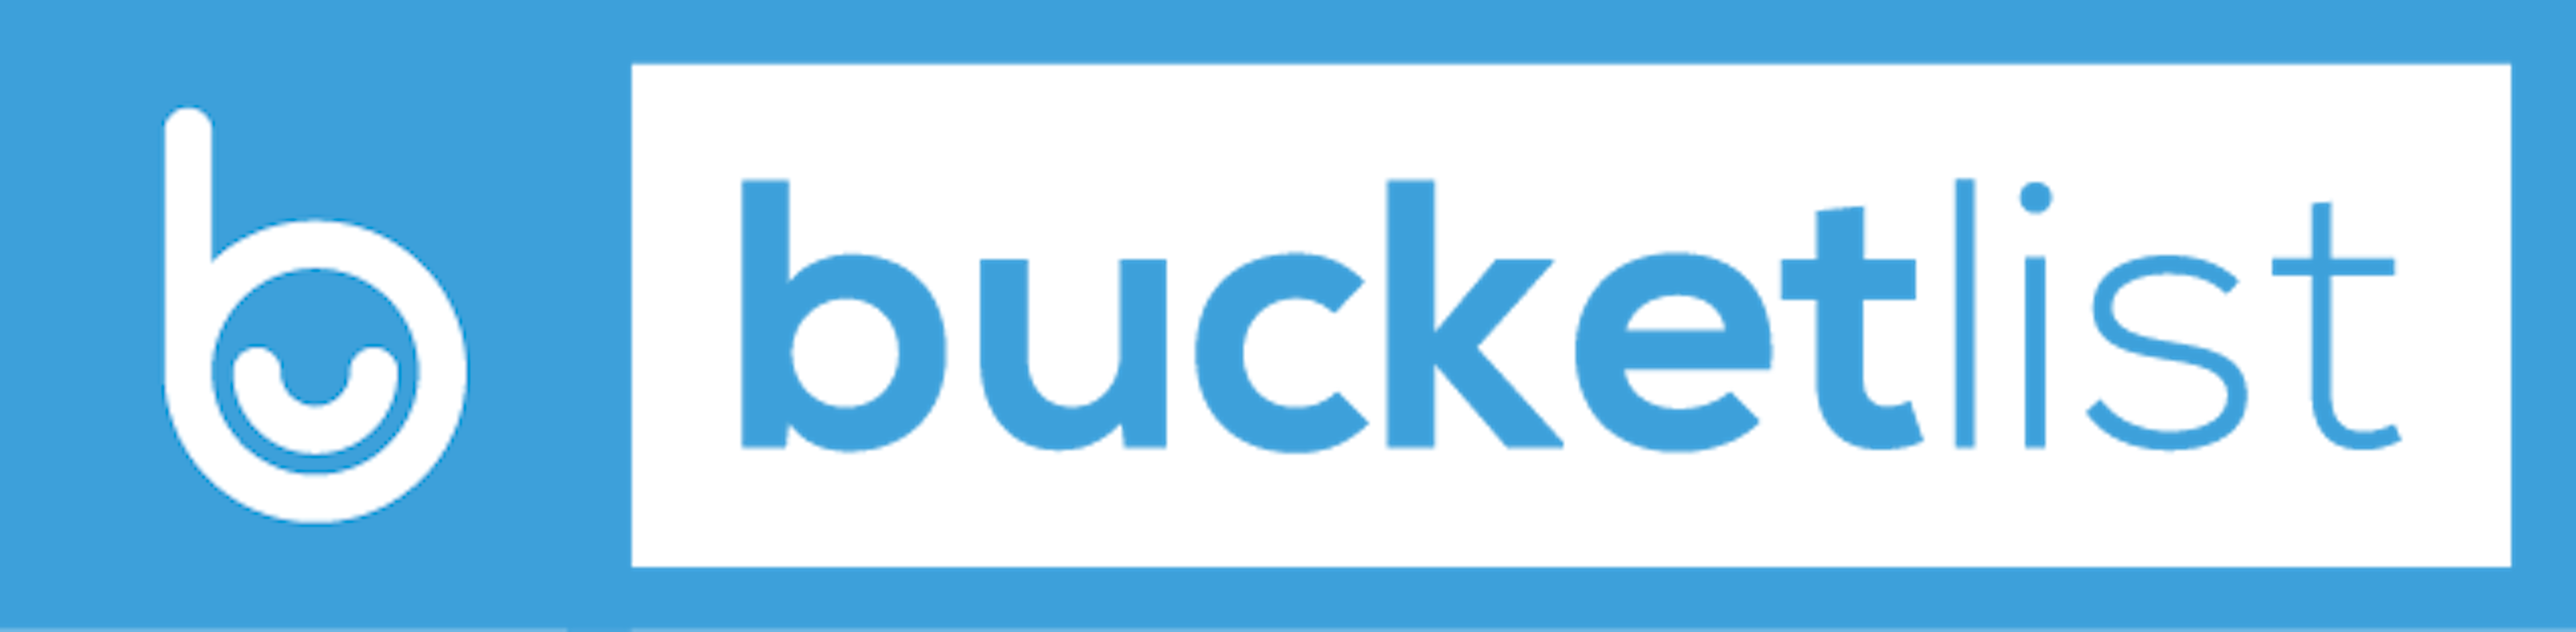 Bucketlist Logo